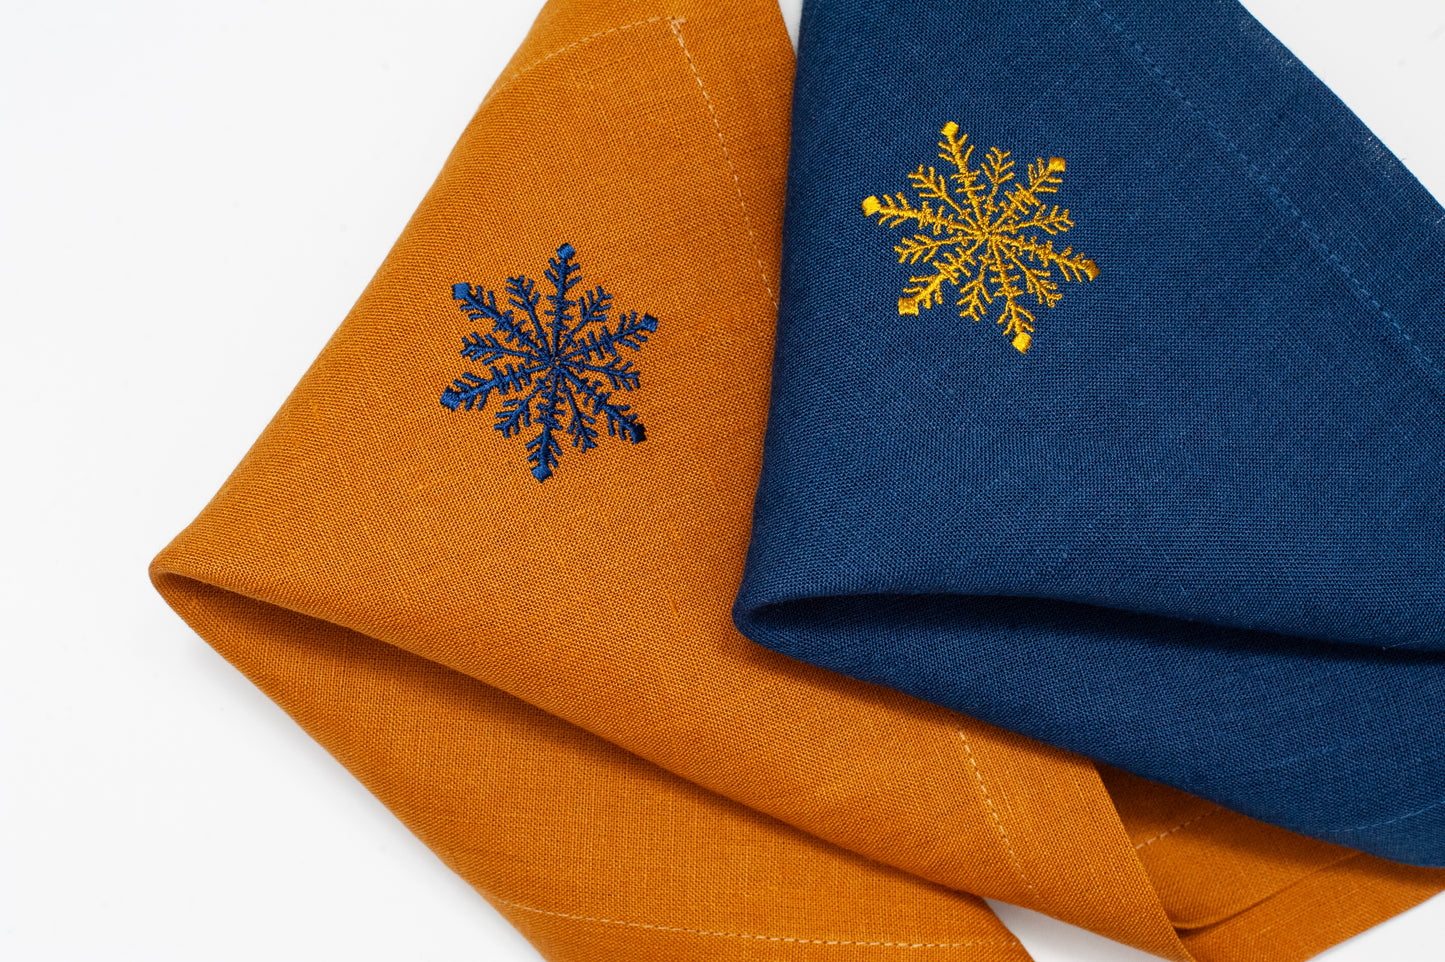 Embroidered Christmas Table Napkins: A Gift of Festive Charm